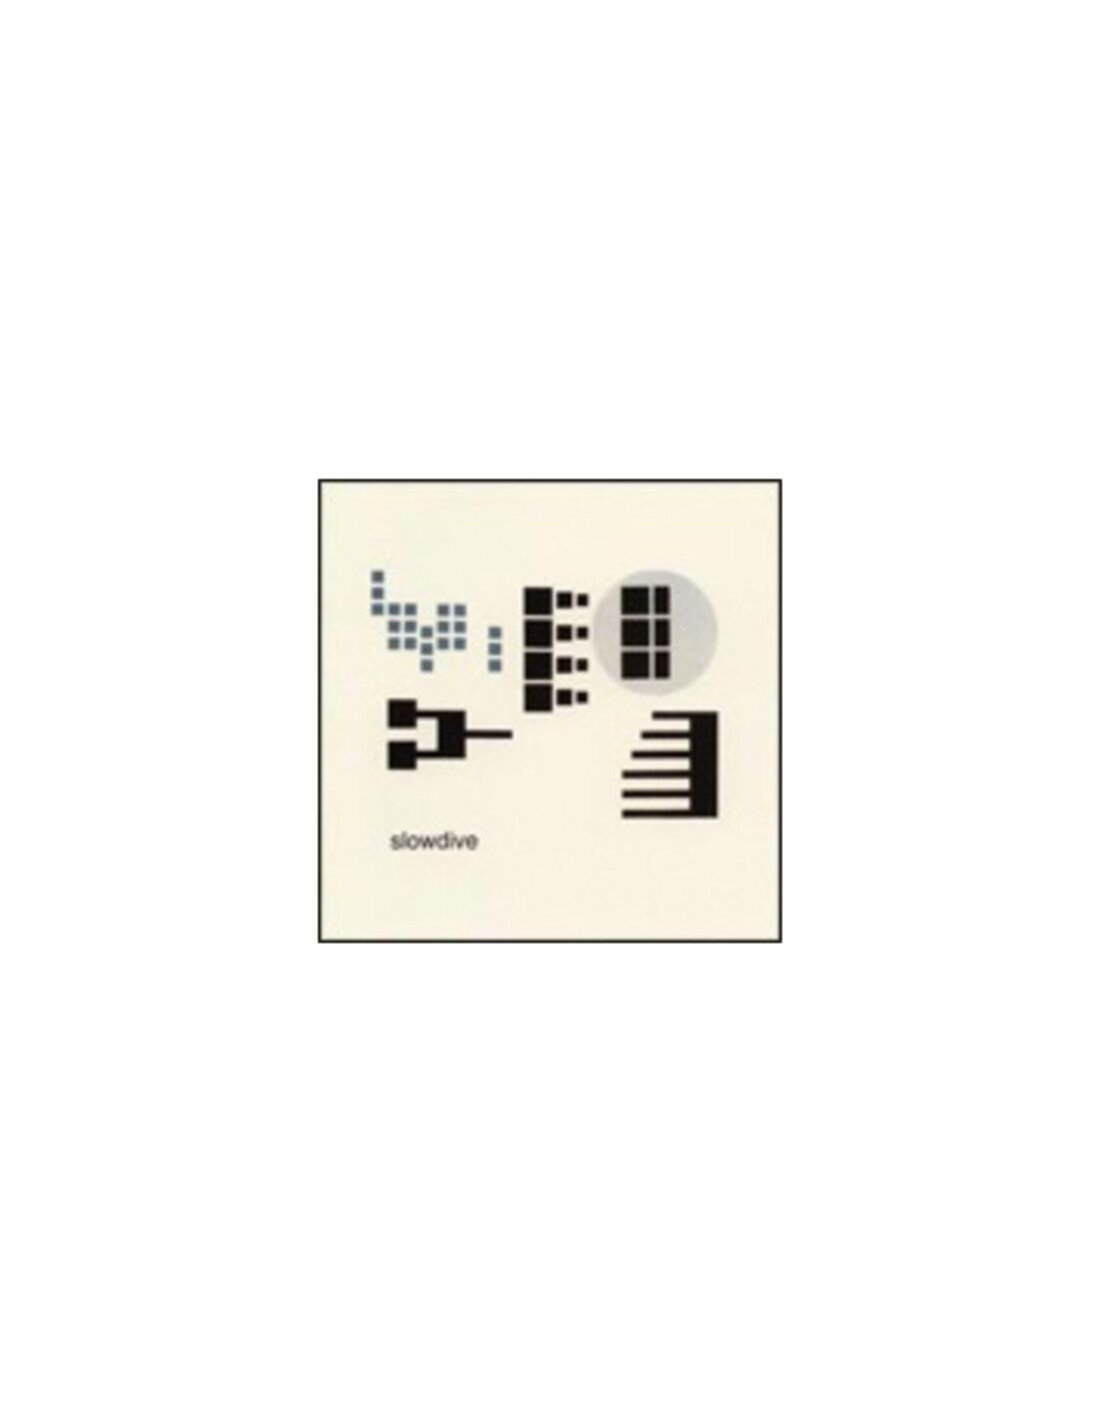 Slowdive - Pygmalion - (CD)